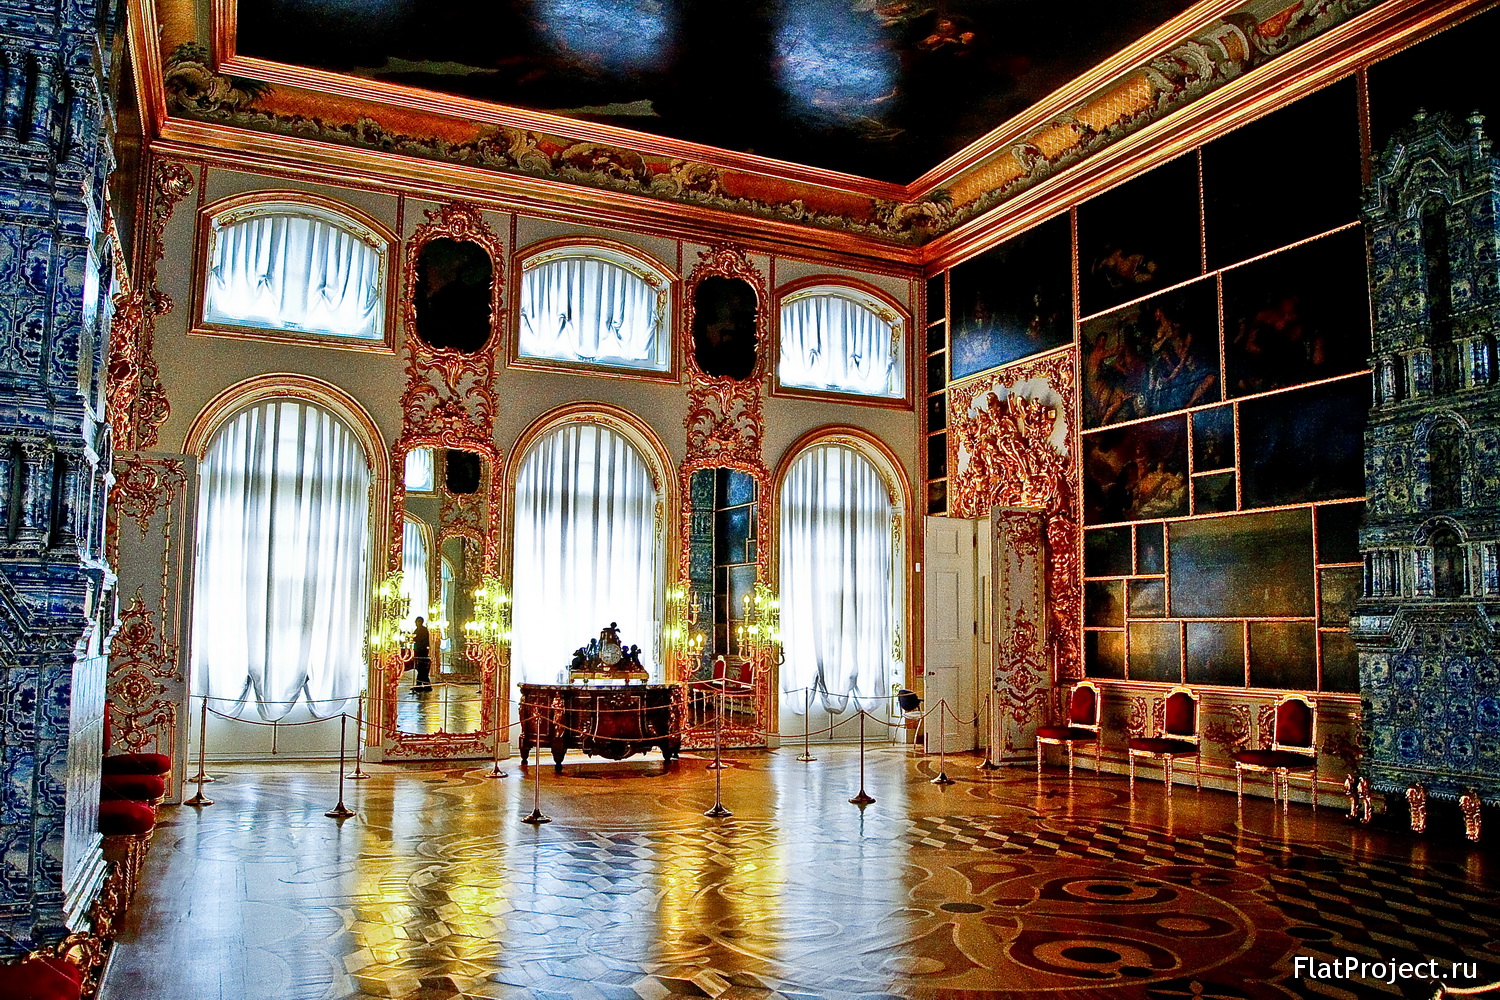 The Catherine Palace interiors – photo 141